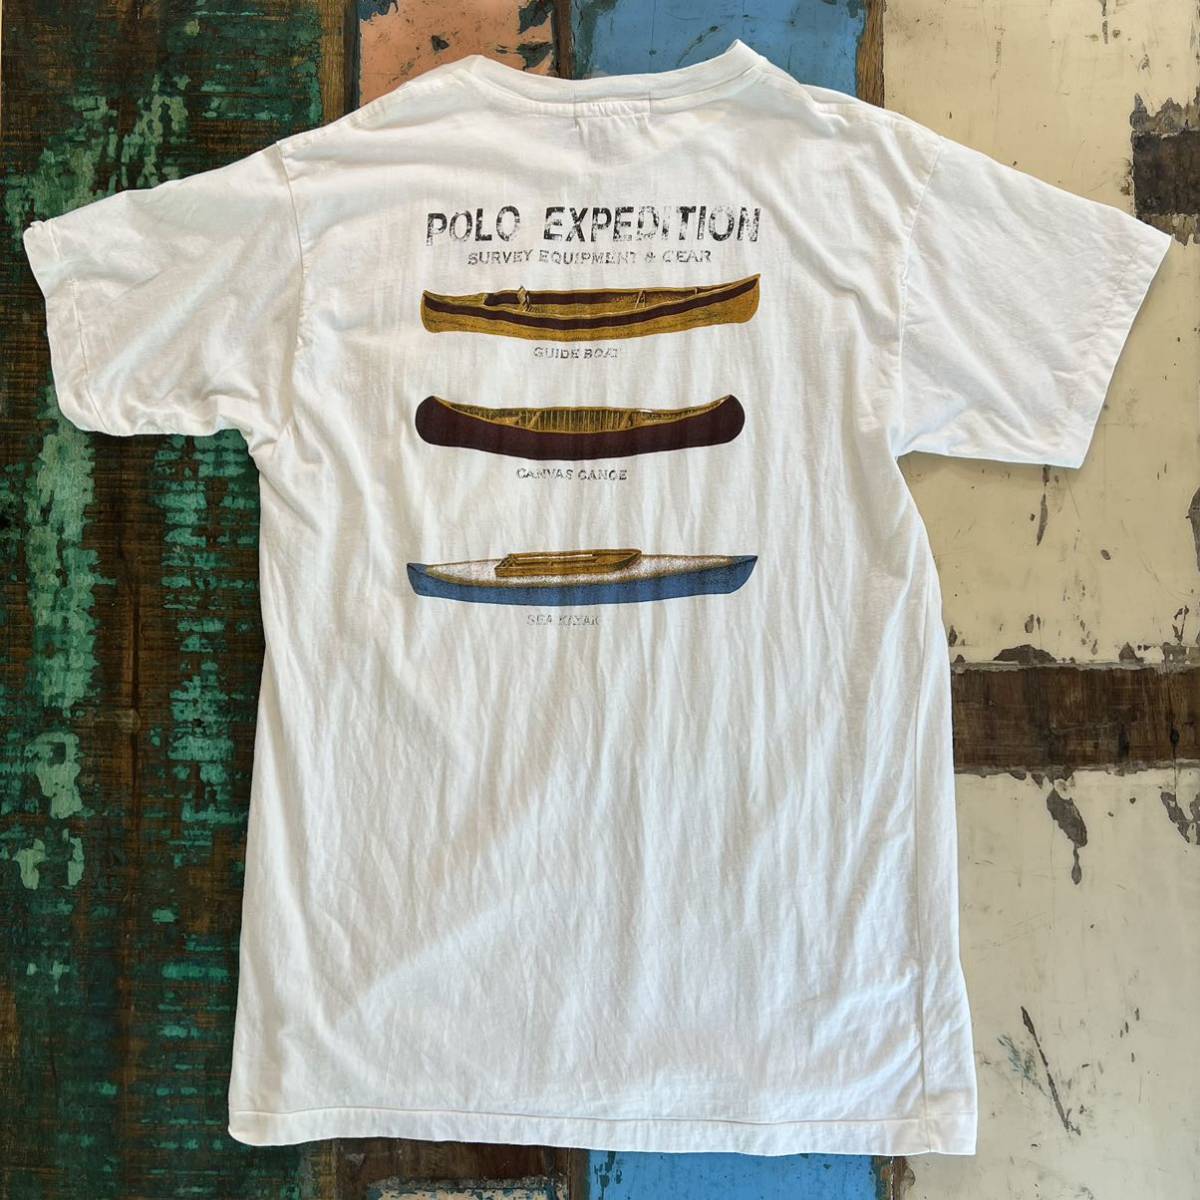 90's レア POLO KAYAK EXPEDITION Ralph Lauren Tee Shirt Made In Usa tシャツ ビンテージ サイズL ポケT